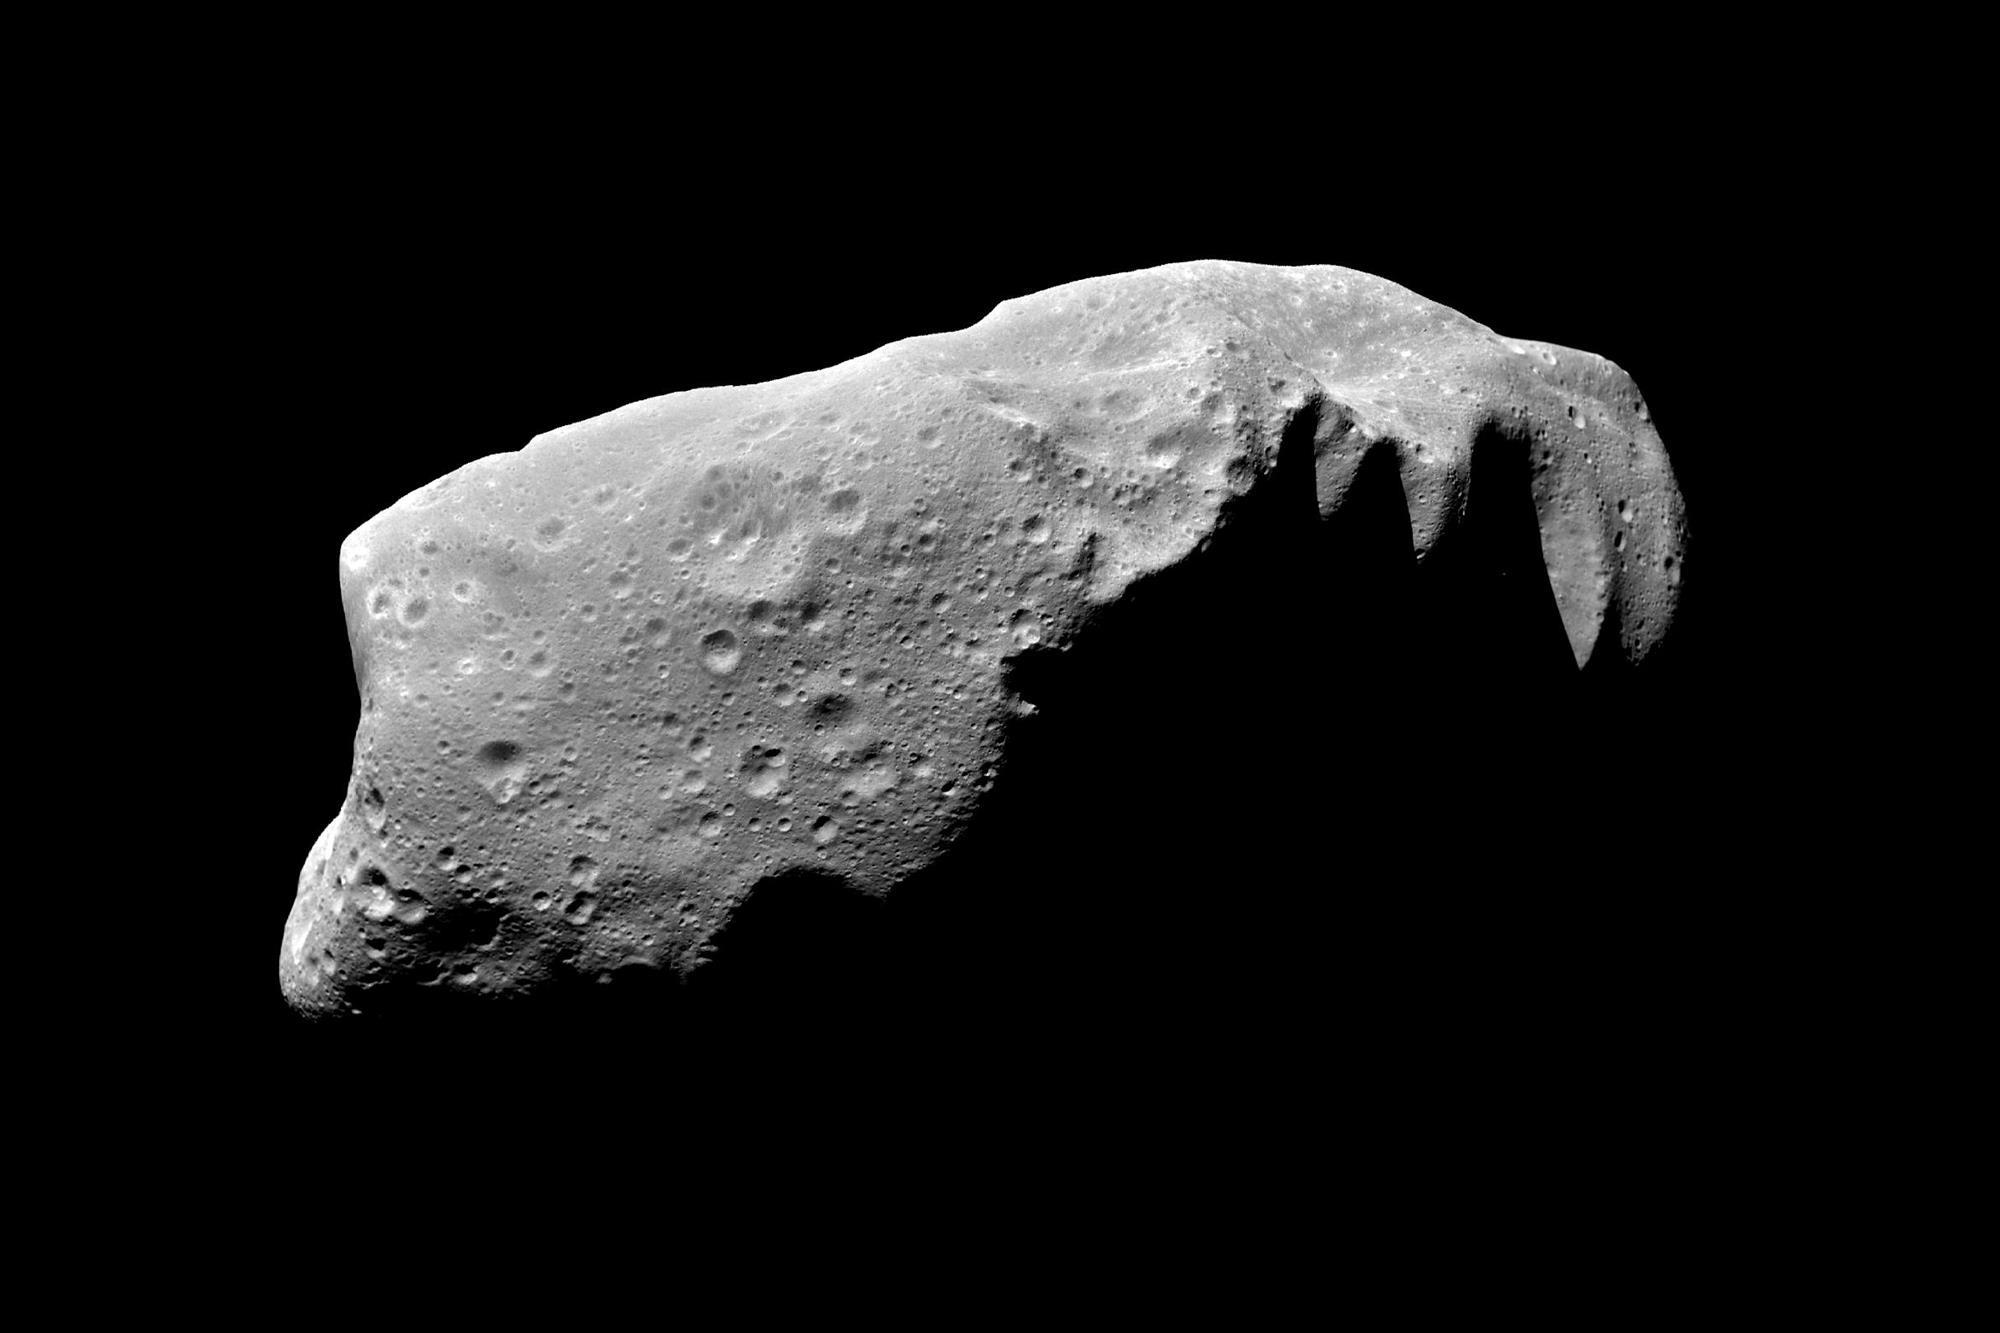 mathilde asteroid